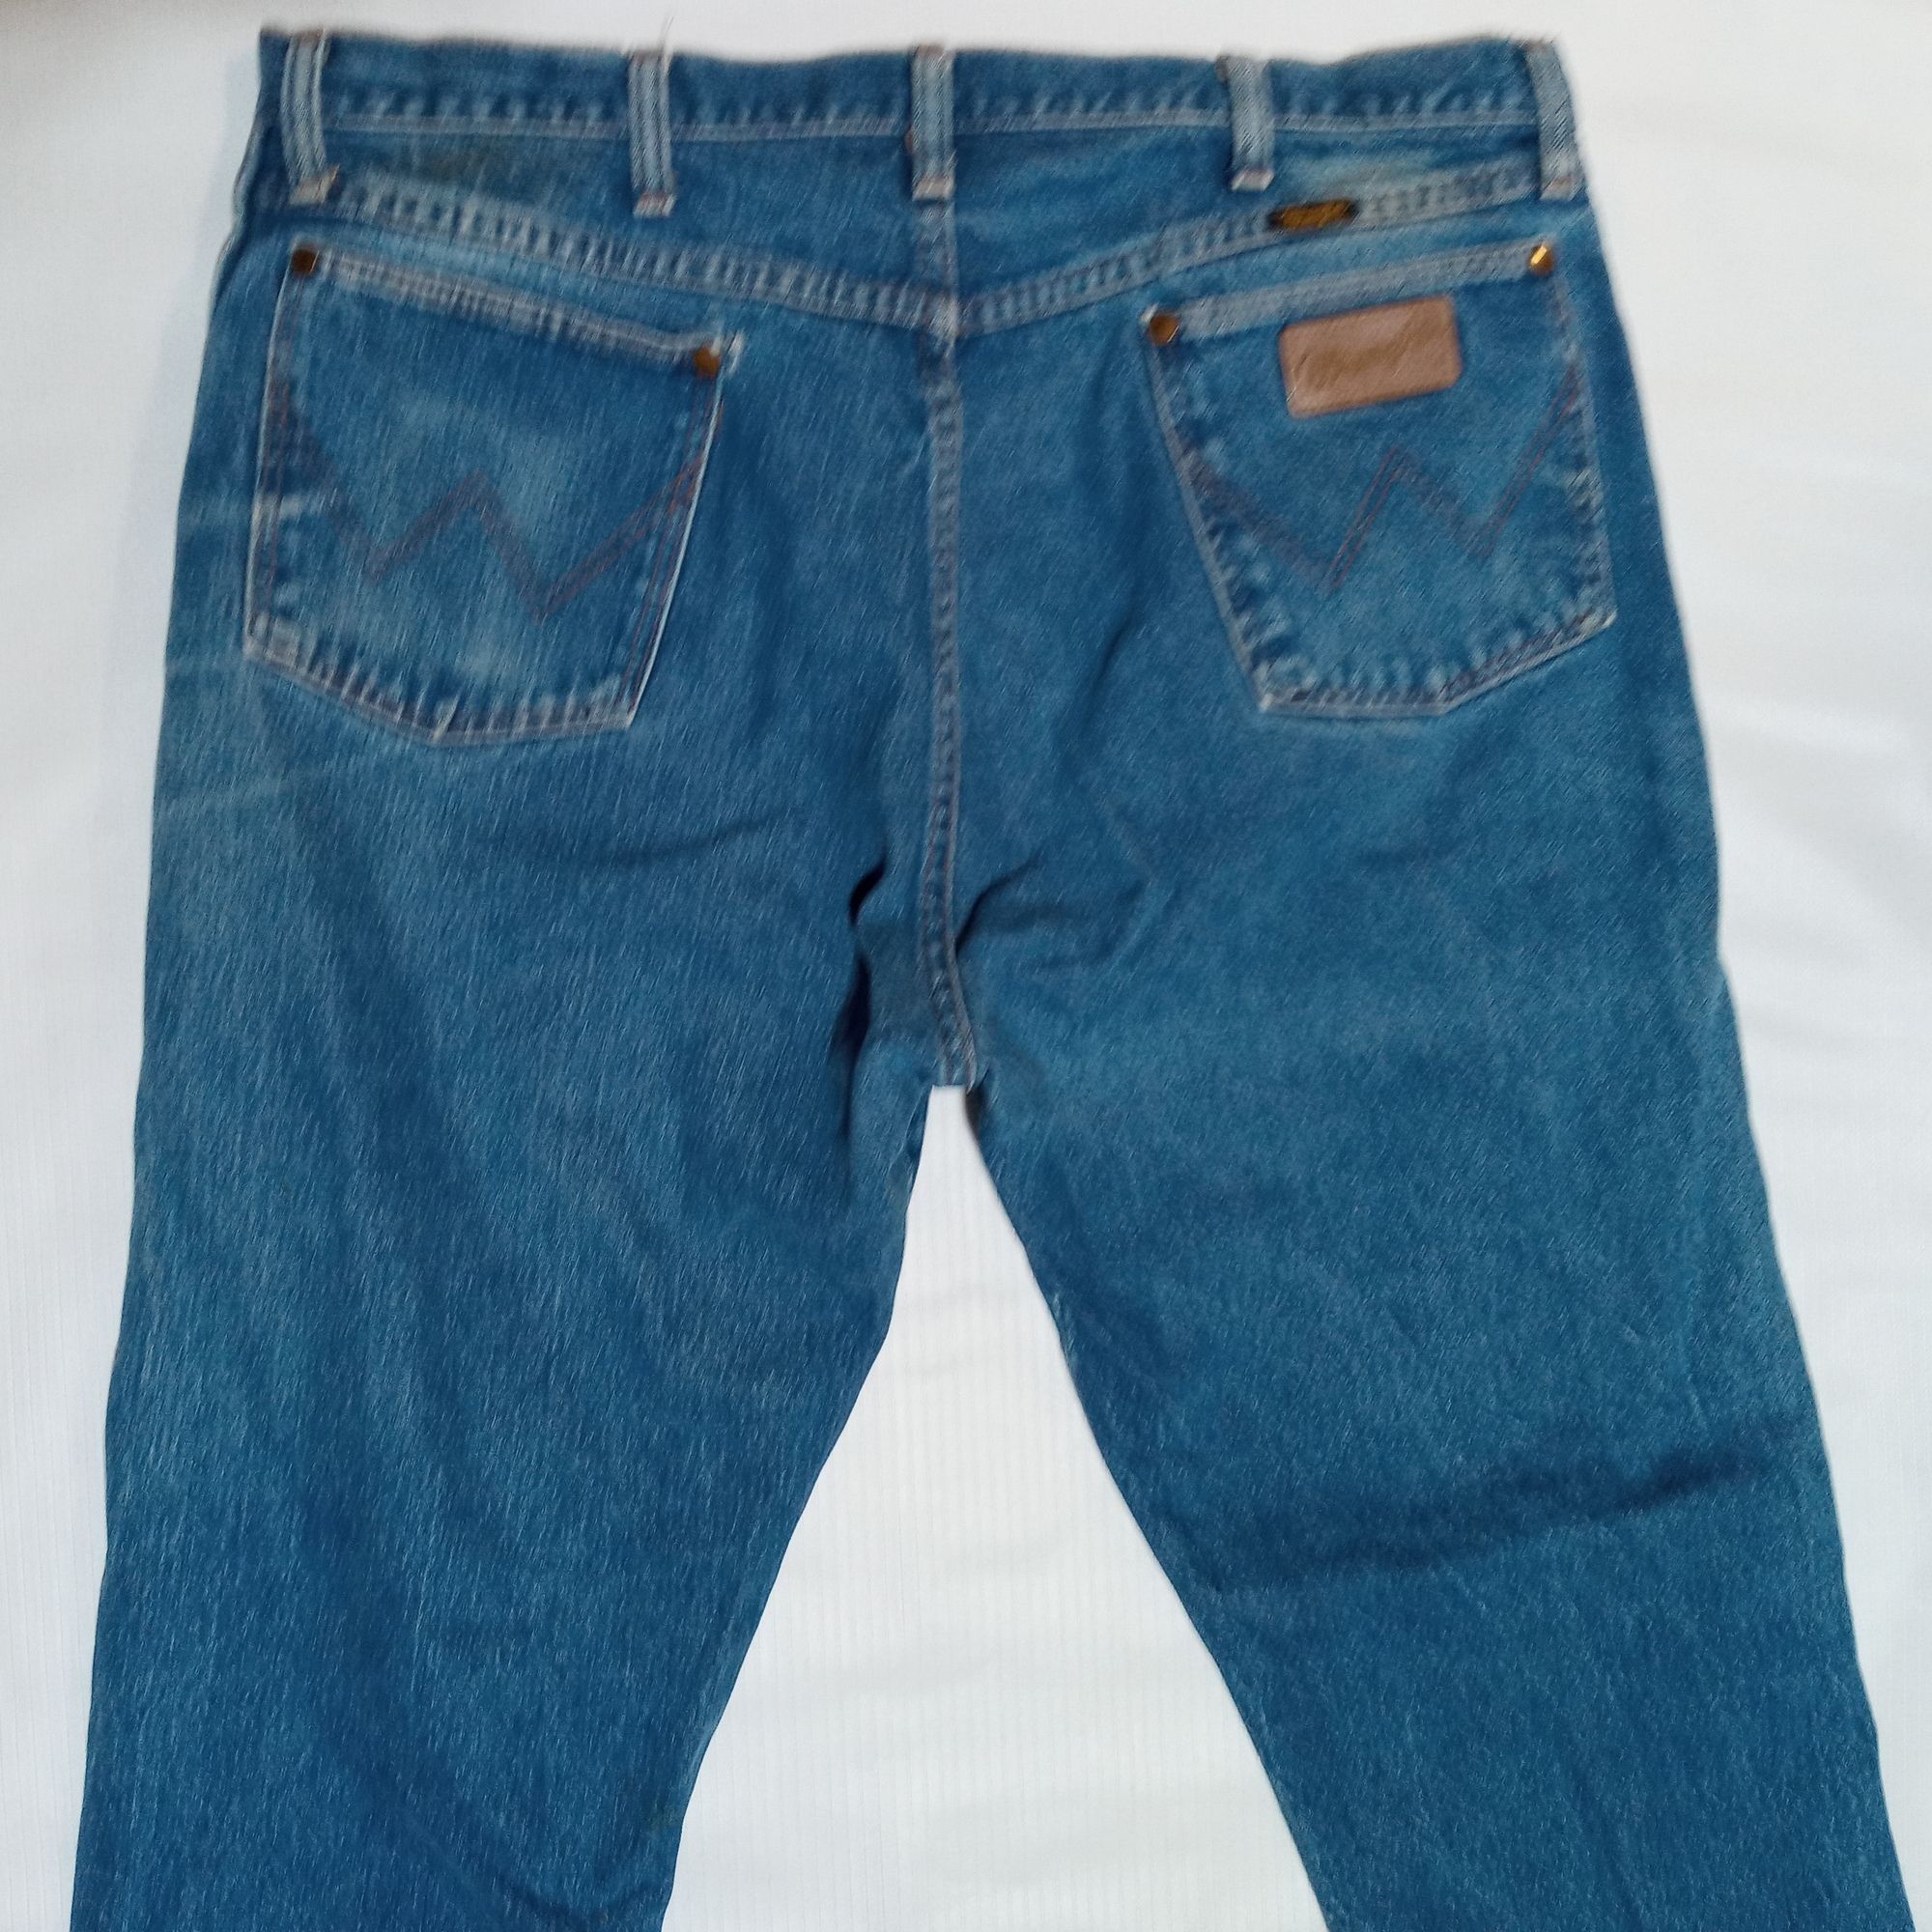 Wrangler Vintage Wrangler Mens Blue Jeans 37 x 28 Faded Worn Denim Co Size US 37 - 8 Thumbnail